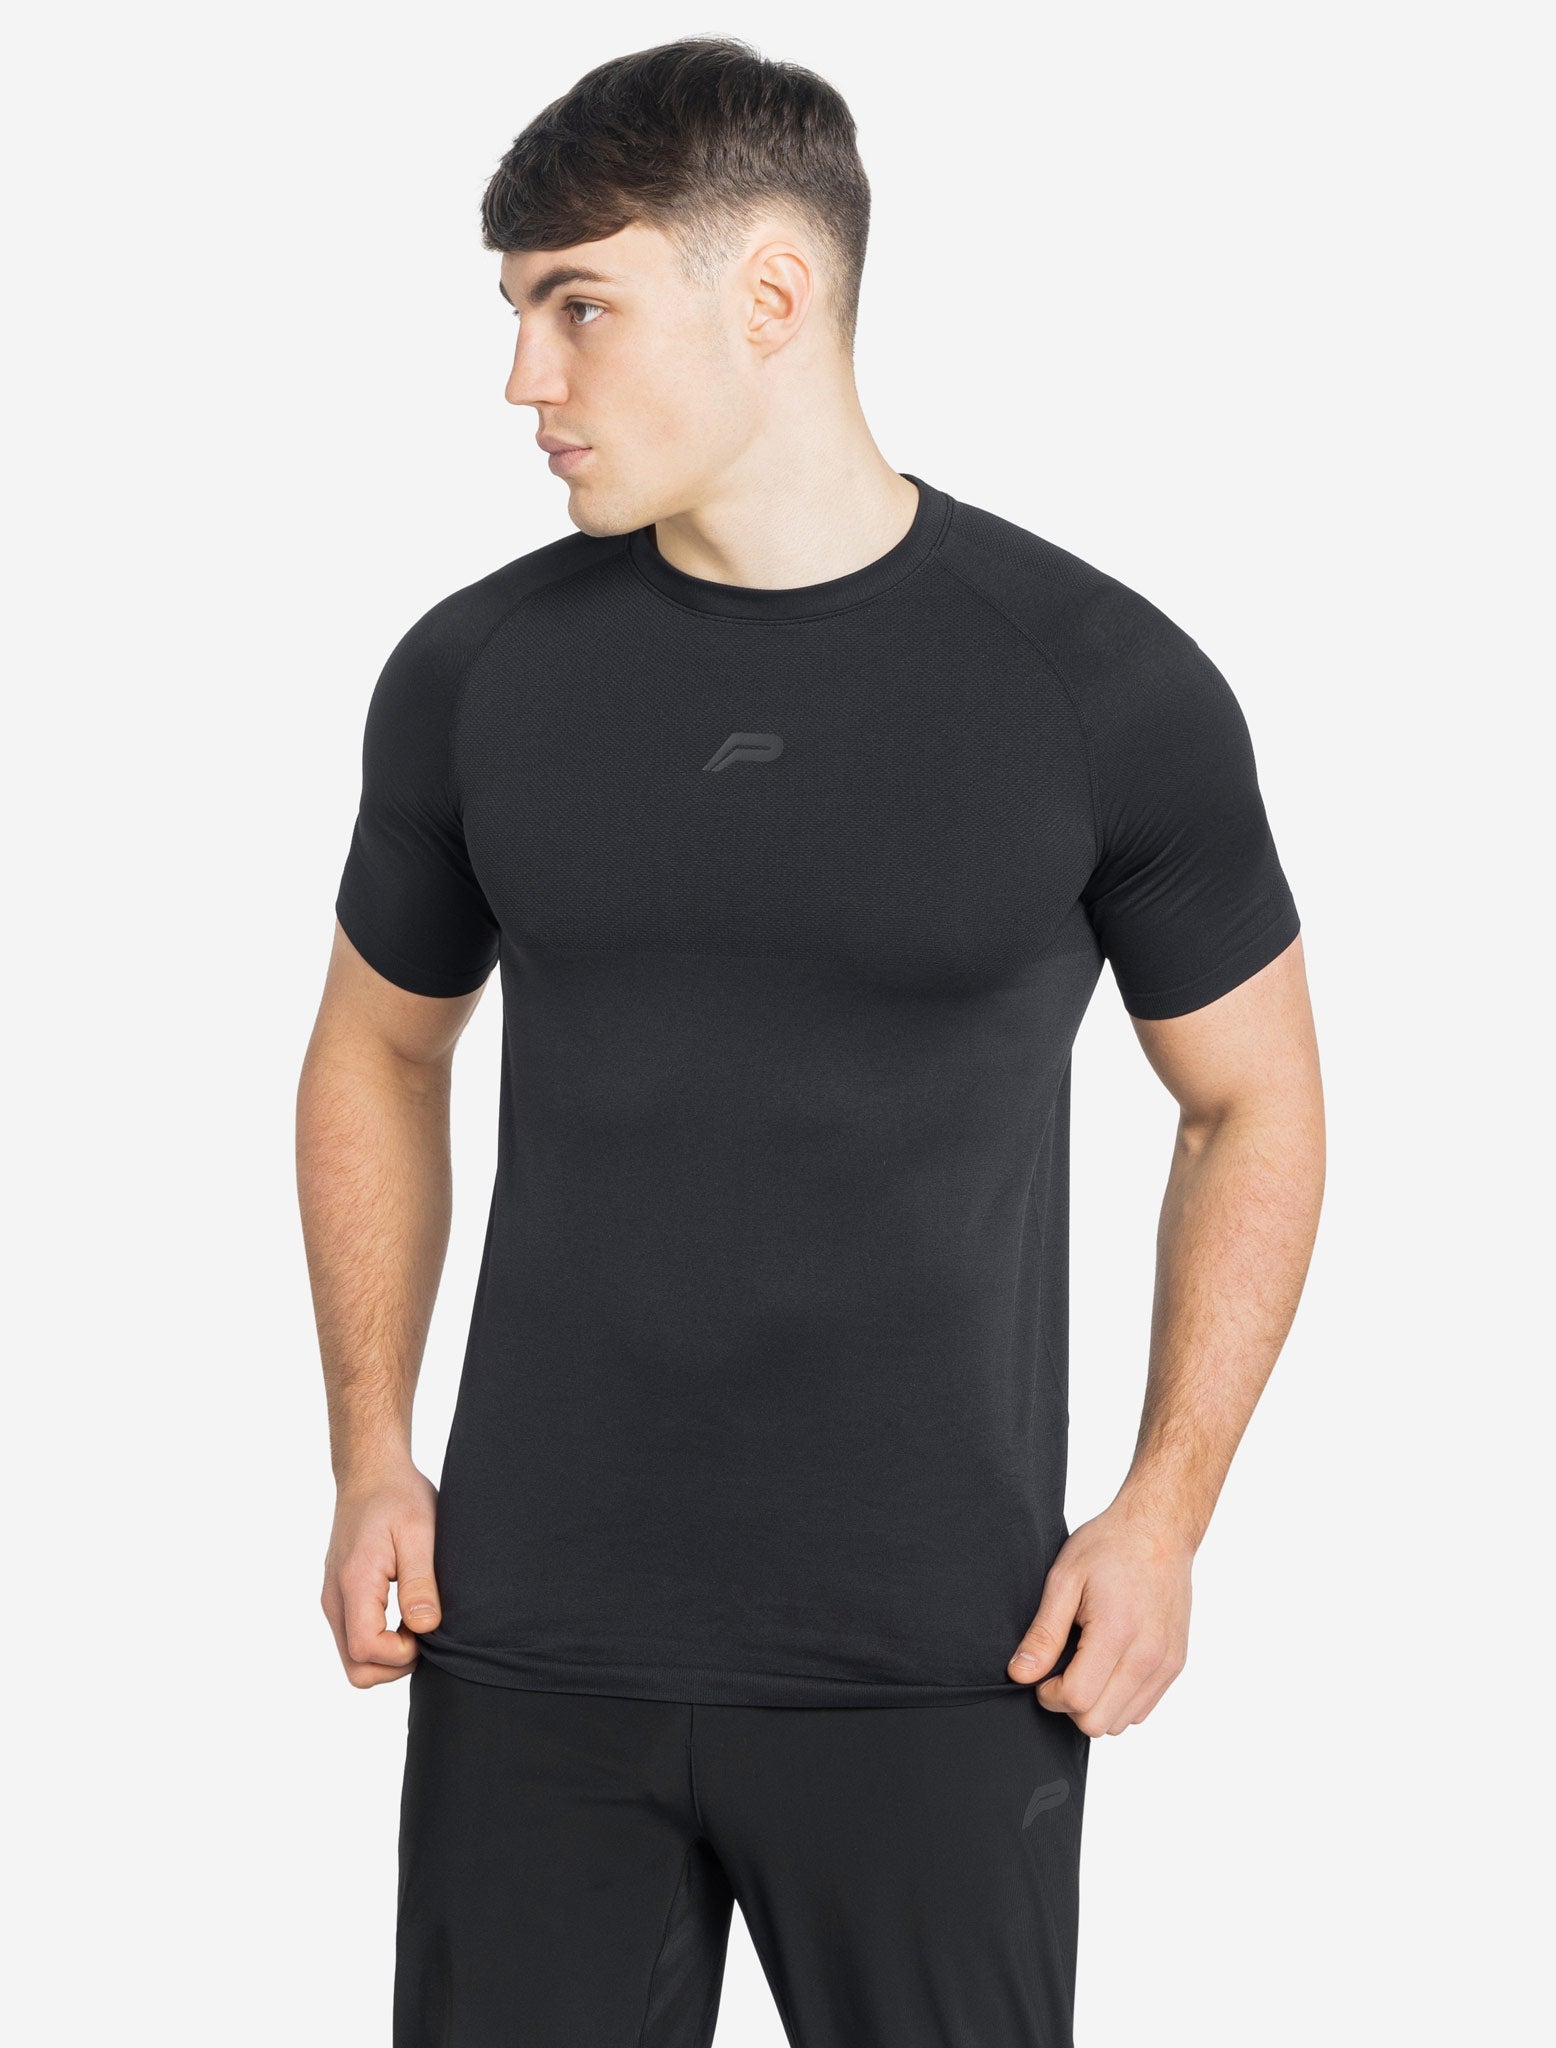 Seamless T-shirt / Black Pursue Fitness 1